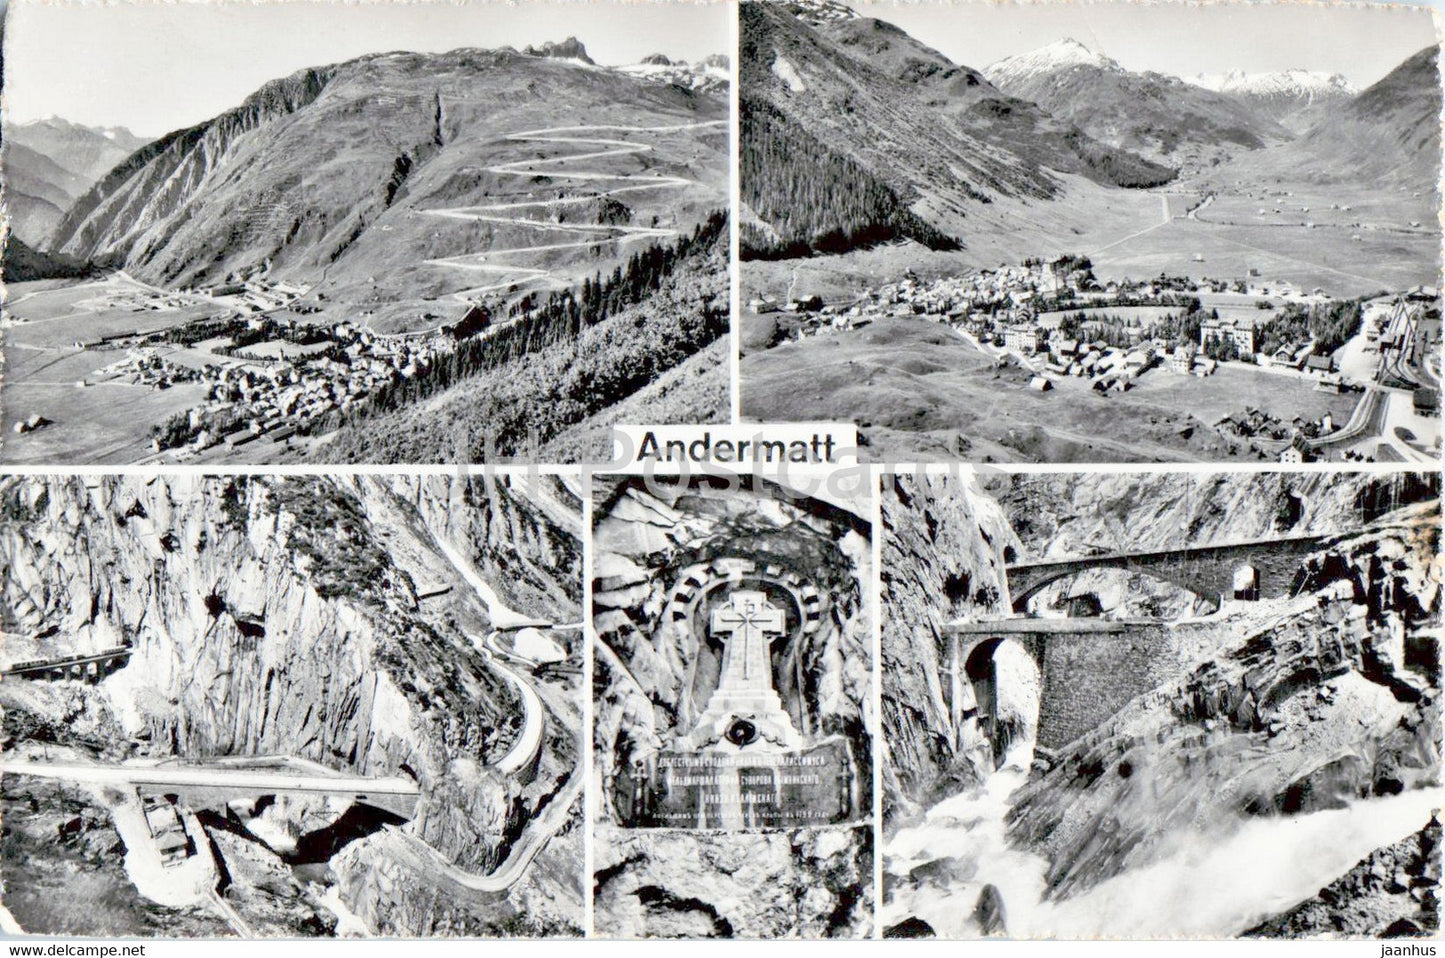 Andermatt - Schollenen mit Teufelsbrucke und Suworoff Denkmal - multiview - 1958 - old postcard - Switzerland - used - JH Postcards